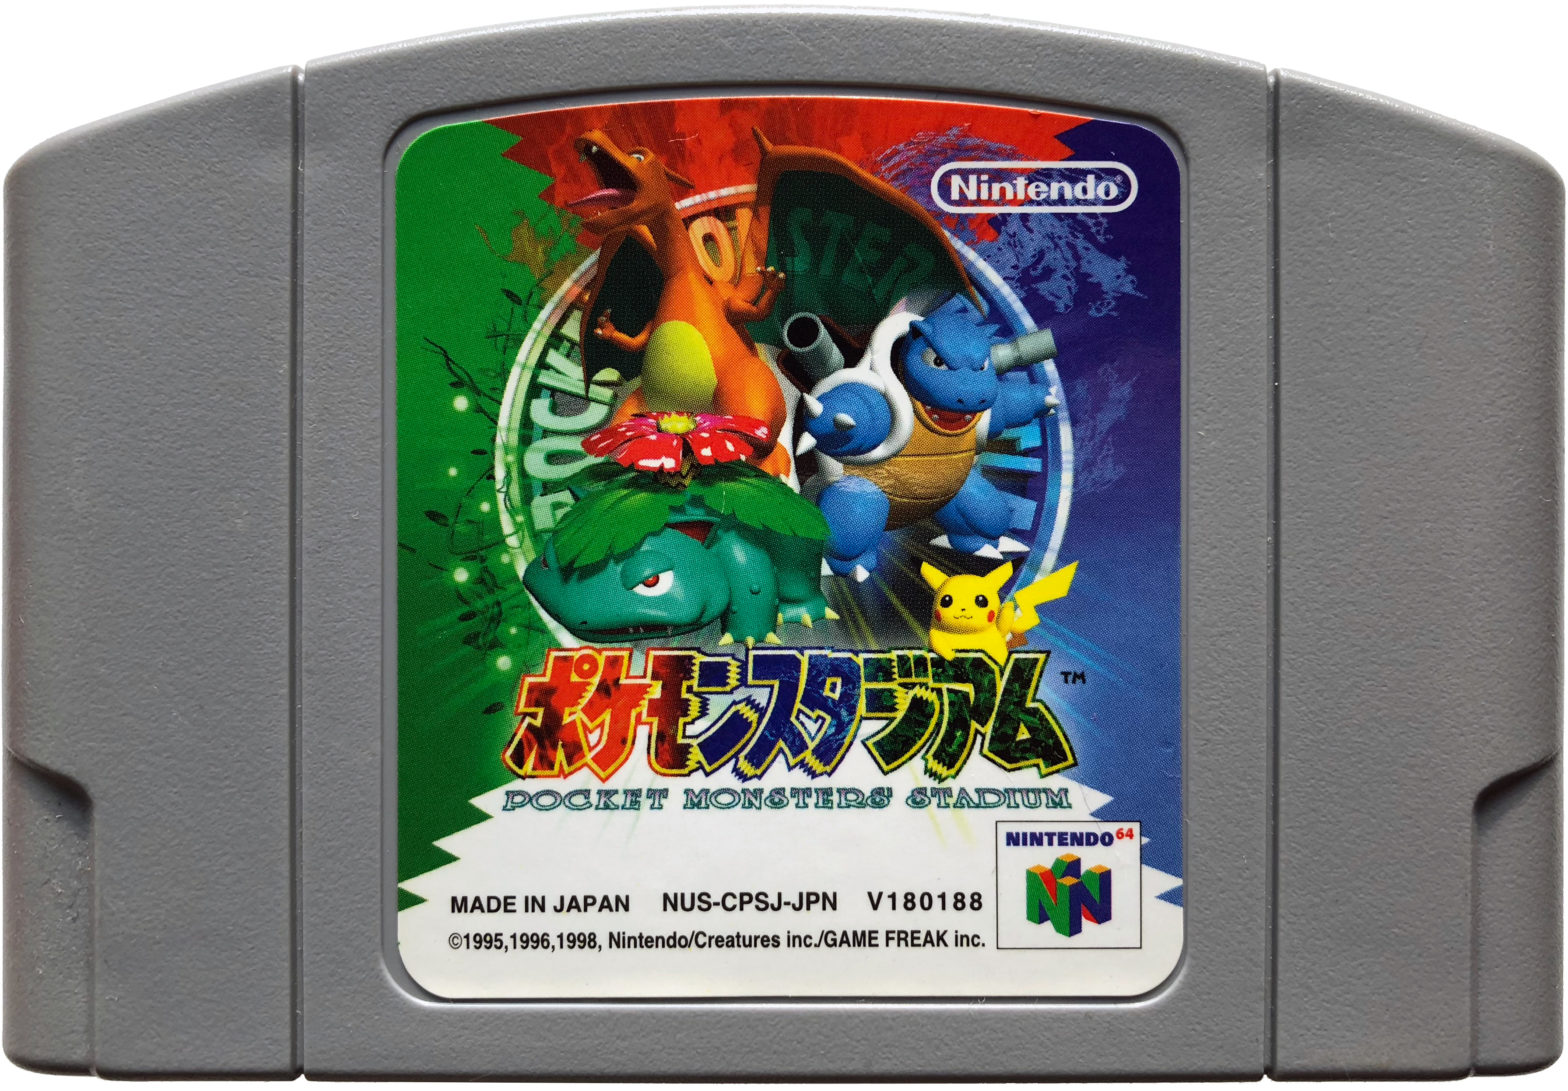 Pocket Monsters (Pokémon) Stadium NTSC-J